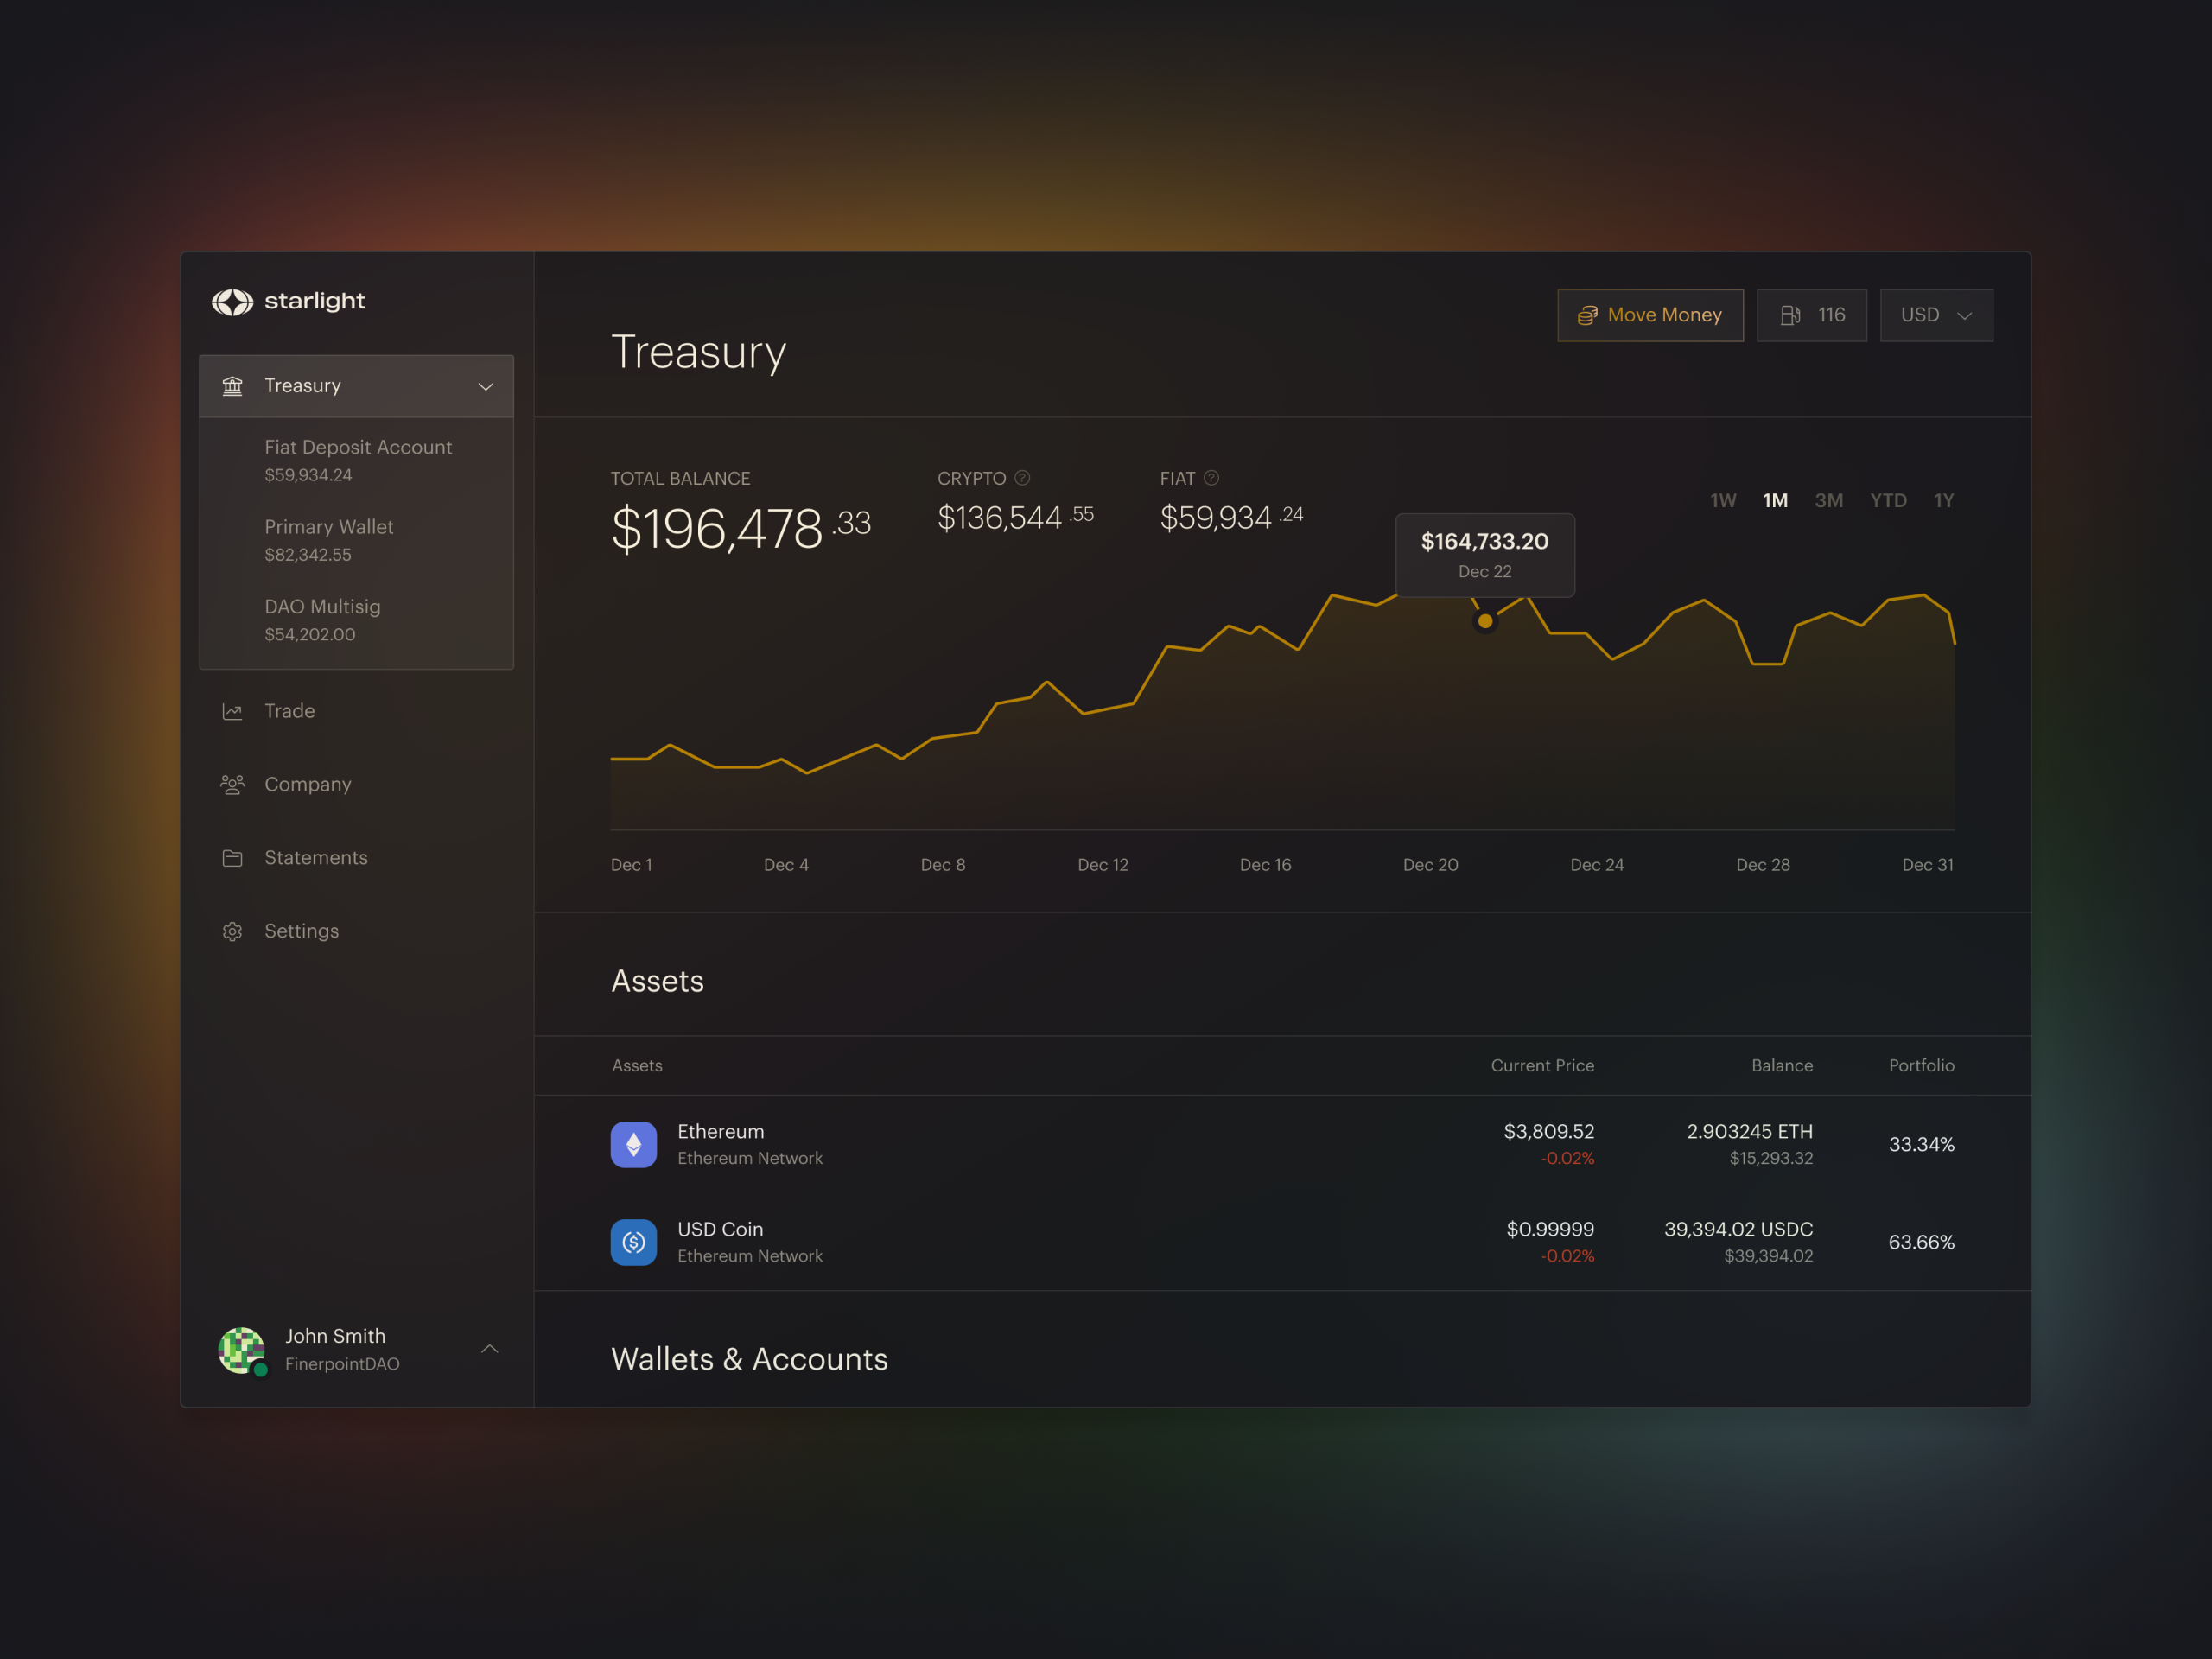 Starlight's treasury management interface